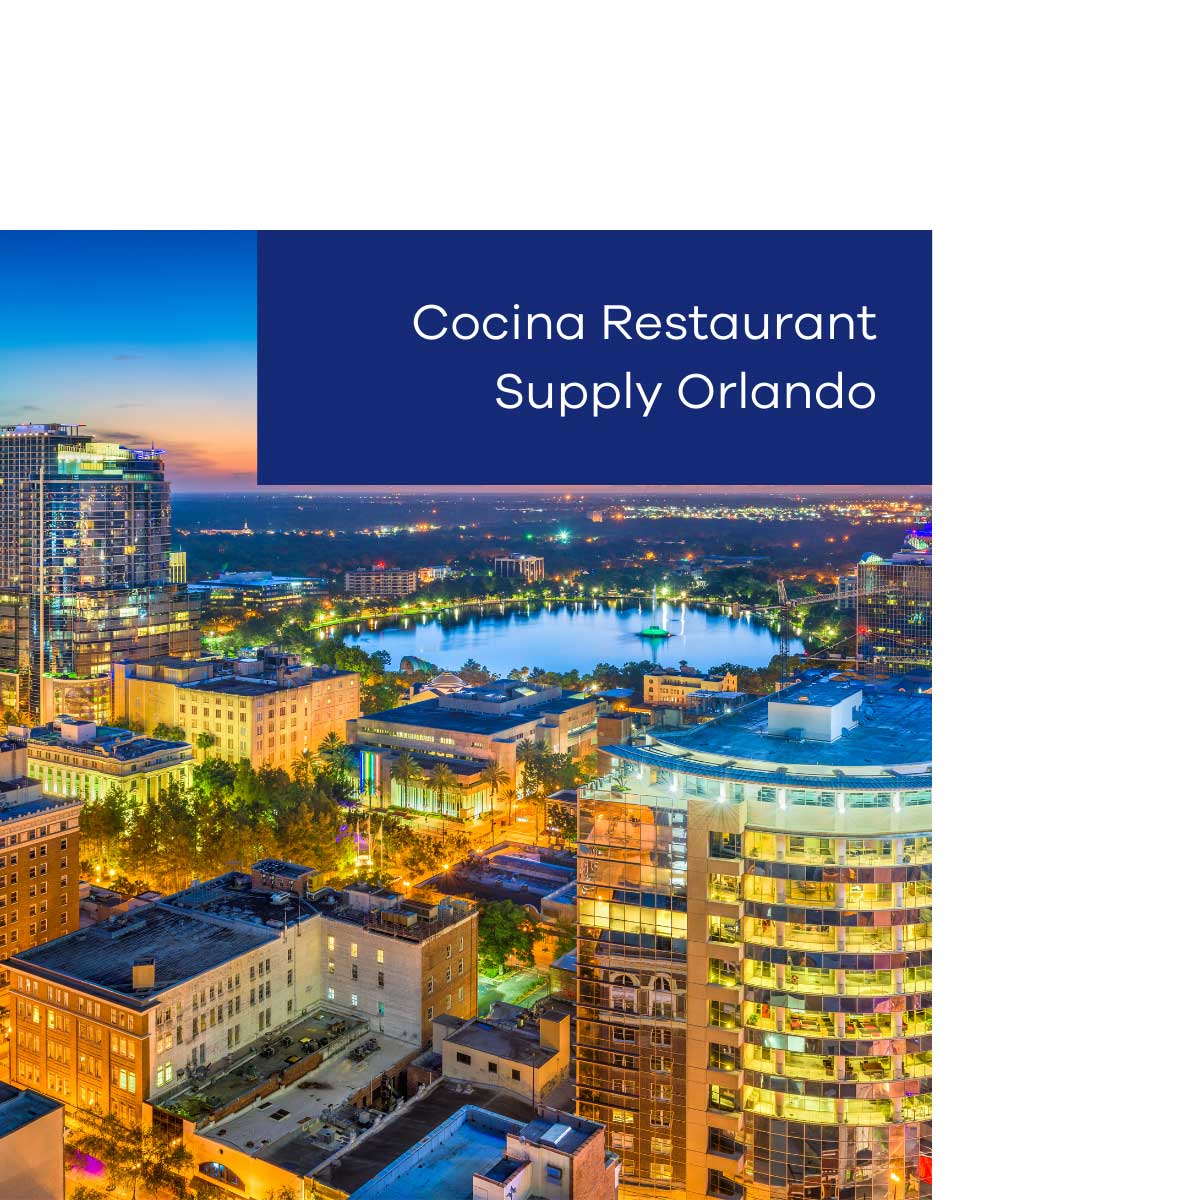 Cocina Restaurant Supply Orlando